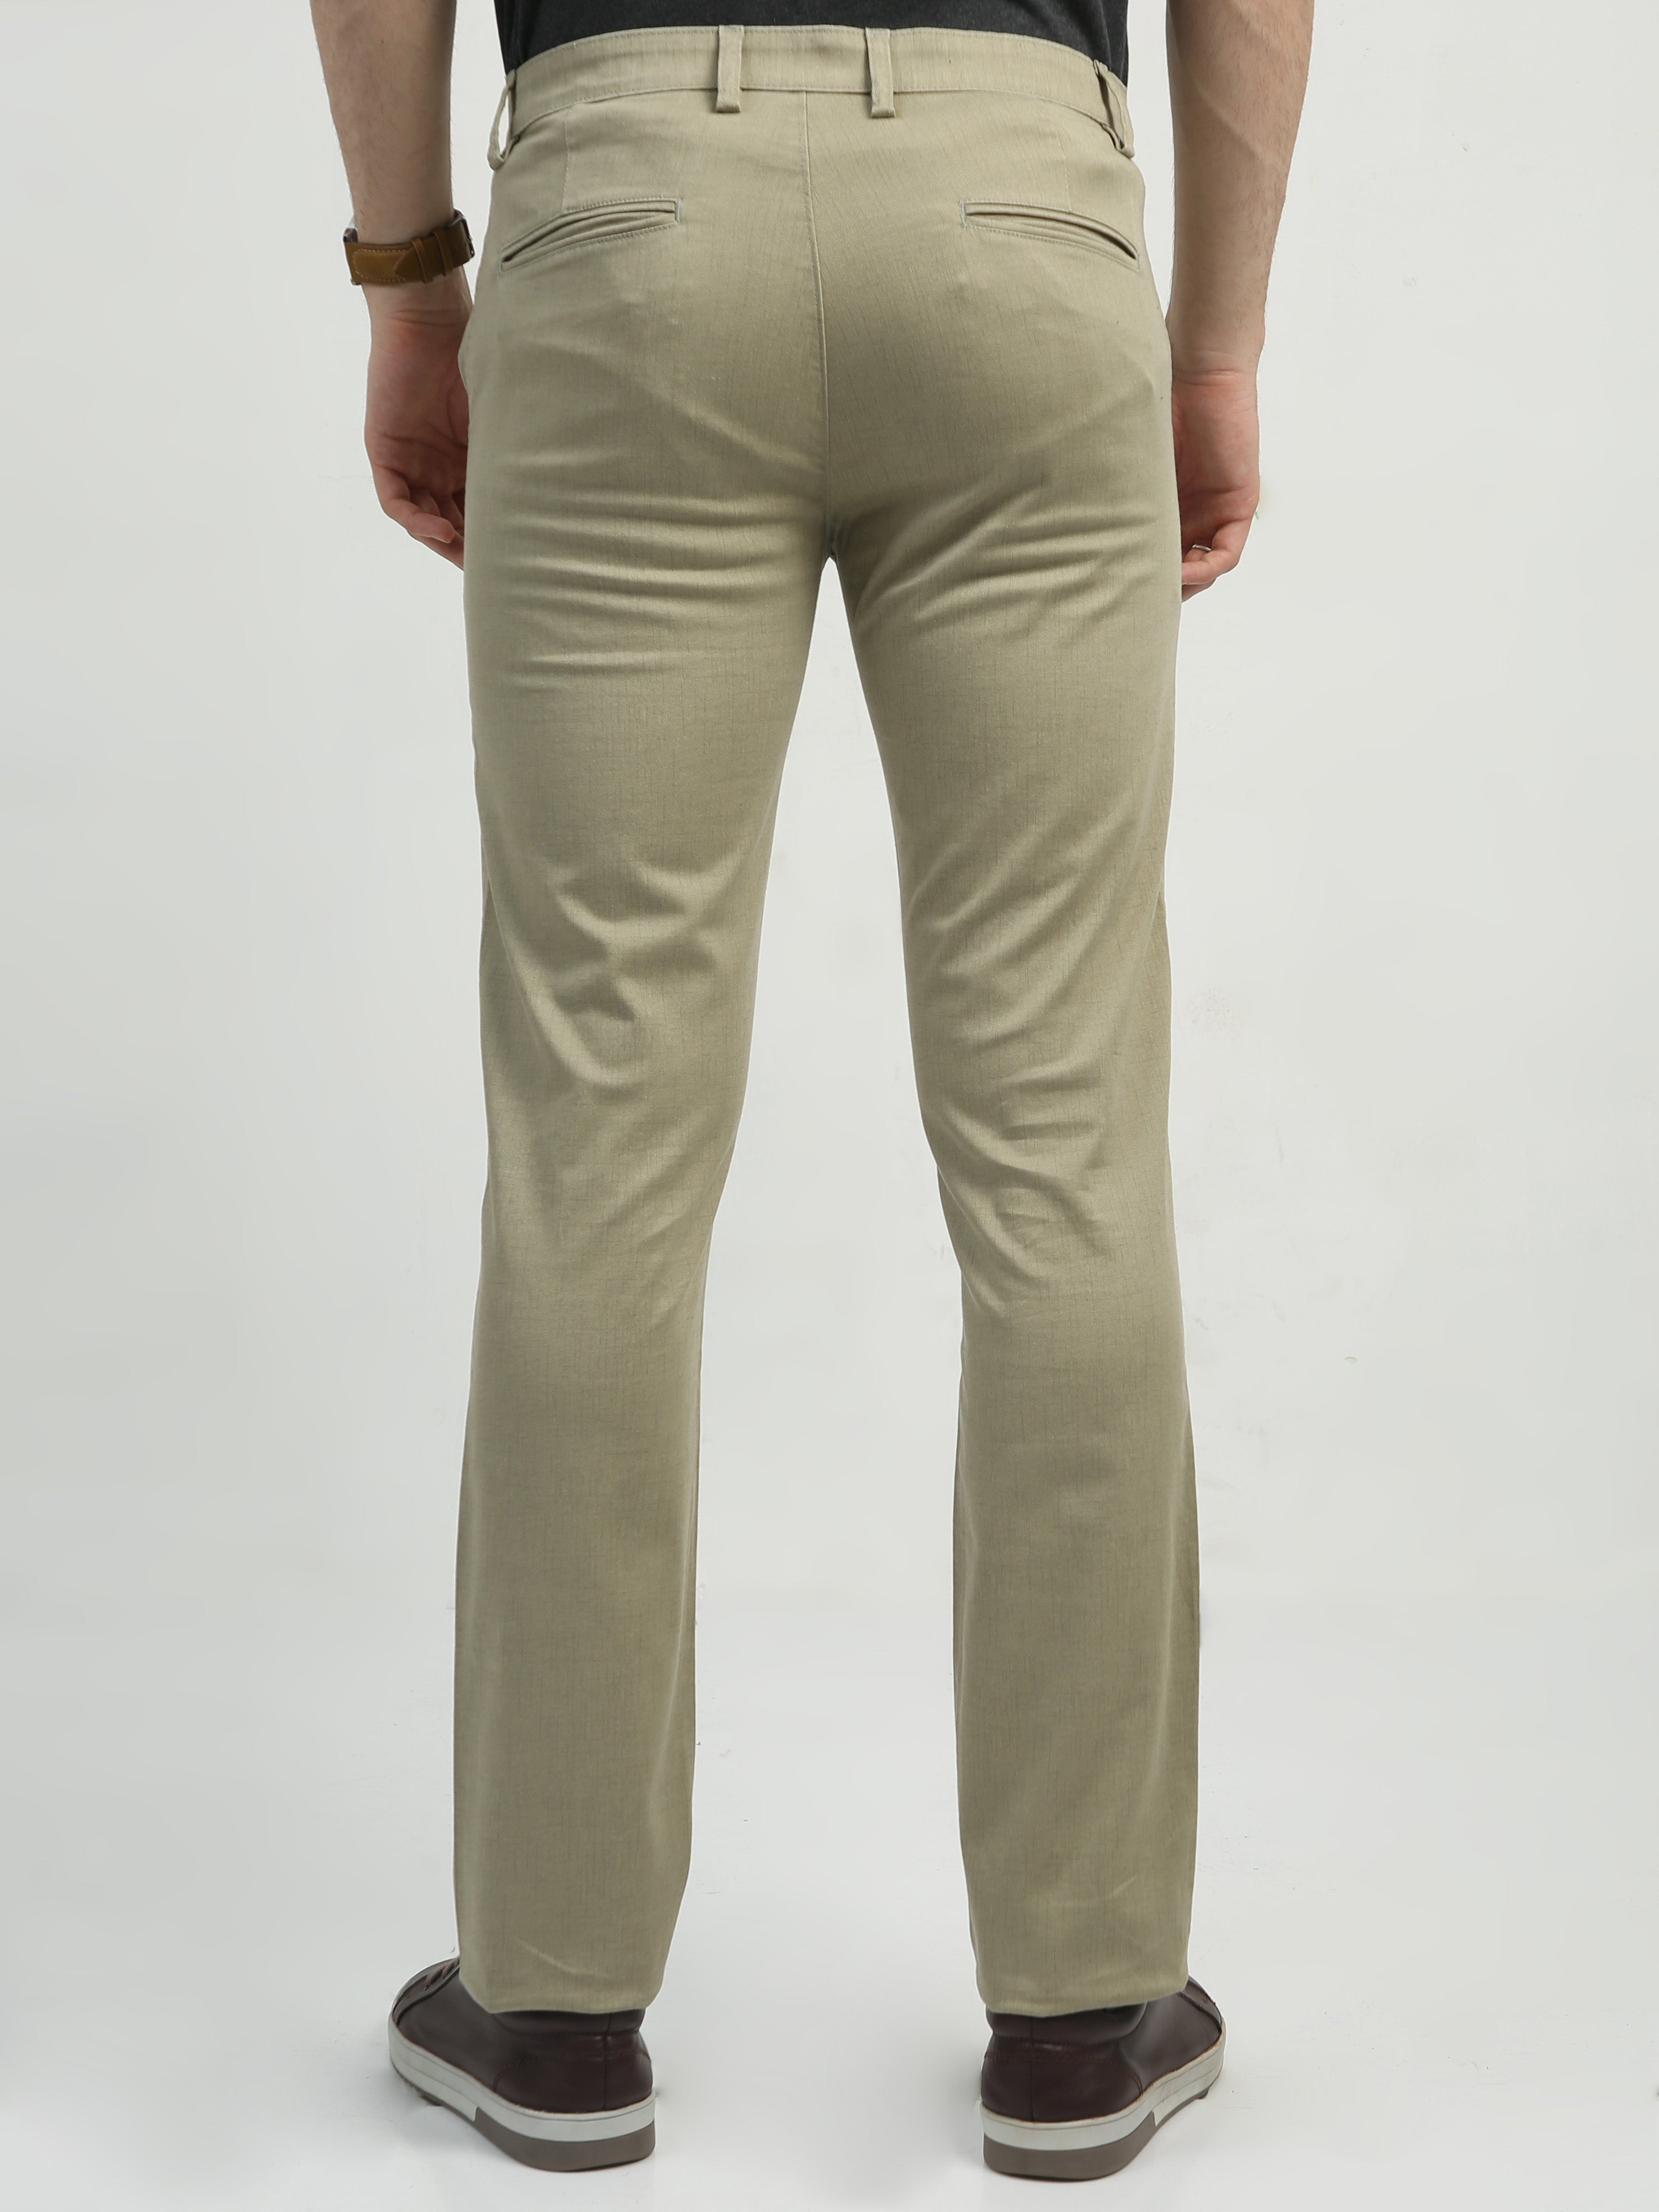 Polo Ralph Lauren Men's Grey Heather Embossed Logo Double Knit Jogger Pants  | eBay